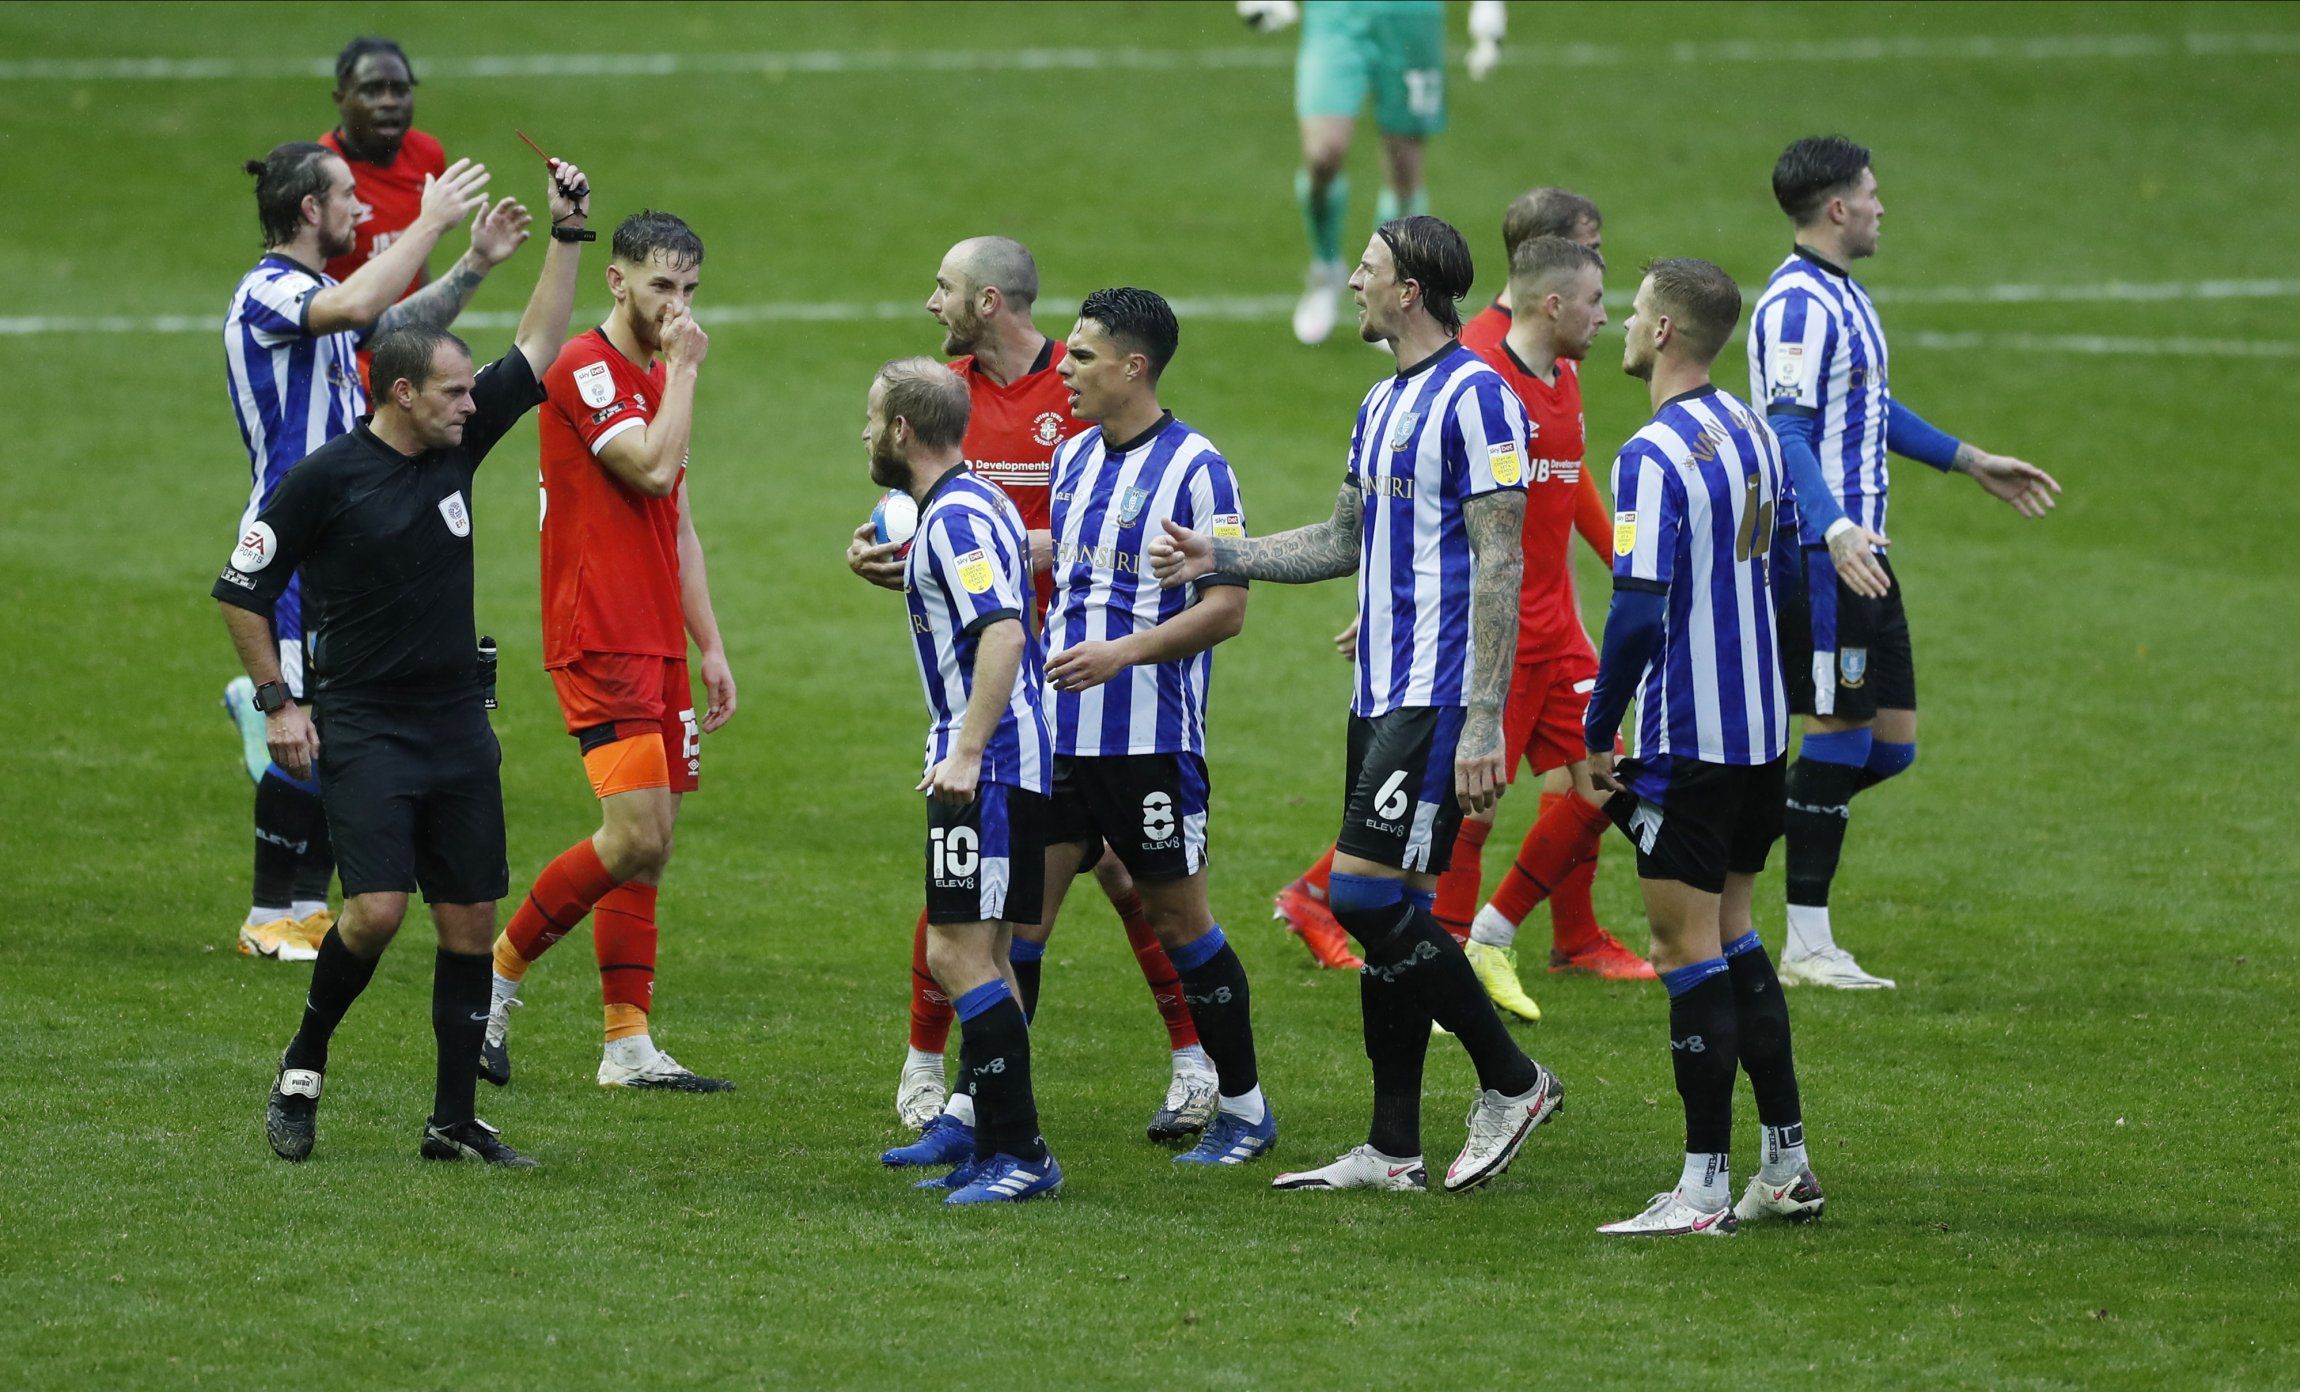 sheffield wednesday defender joost van aken is shown a red card